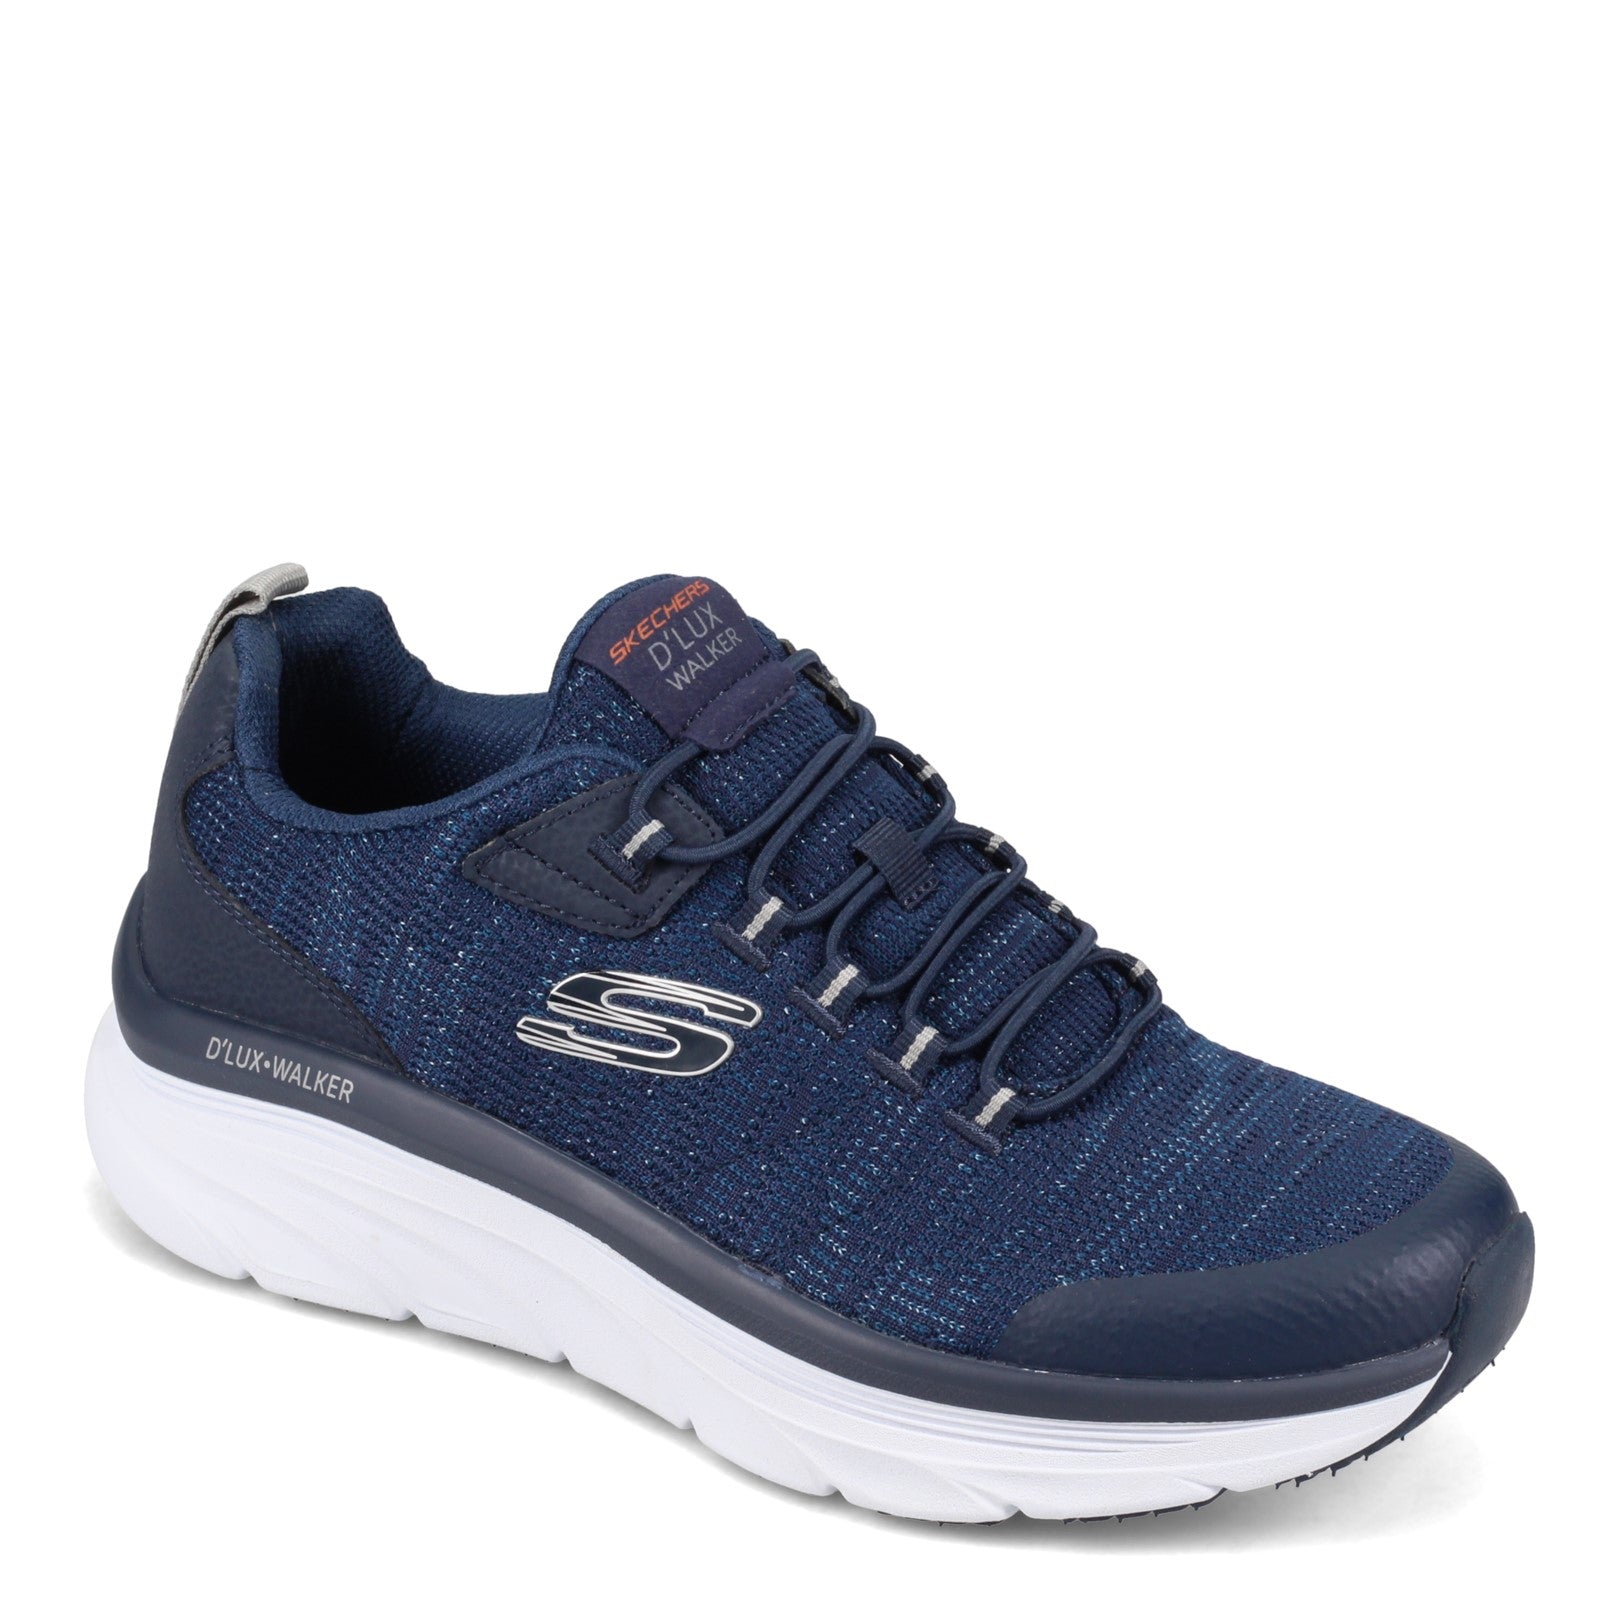 Skechers Men's Go Walk Flex Charcoal/Blue Nordic Walking Shoes